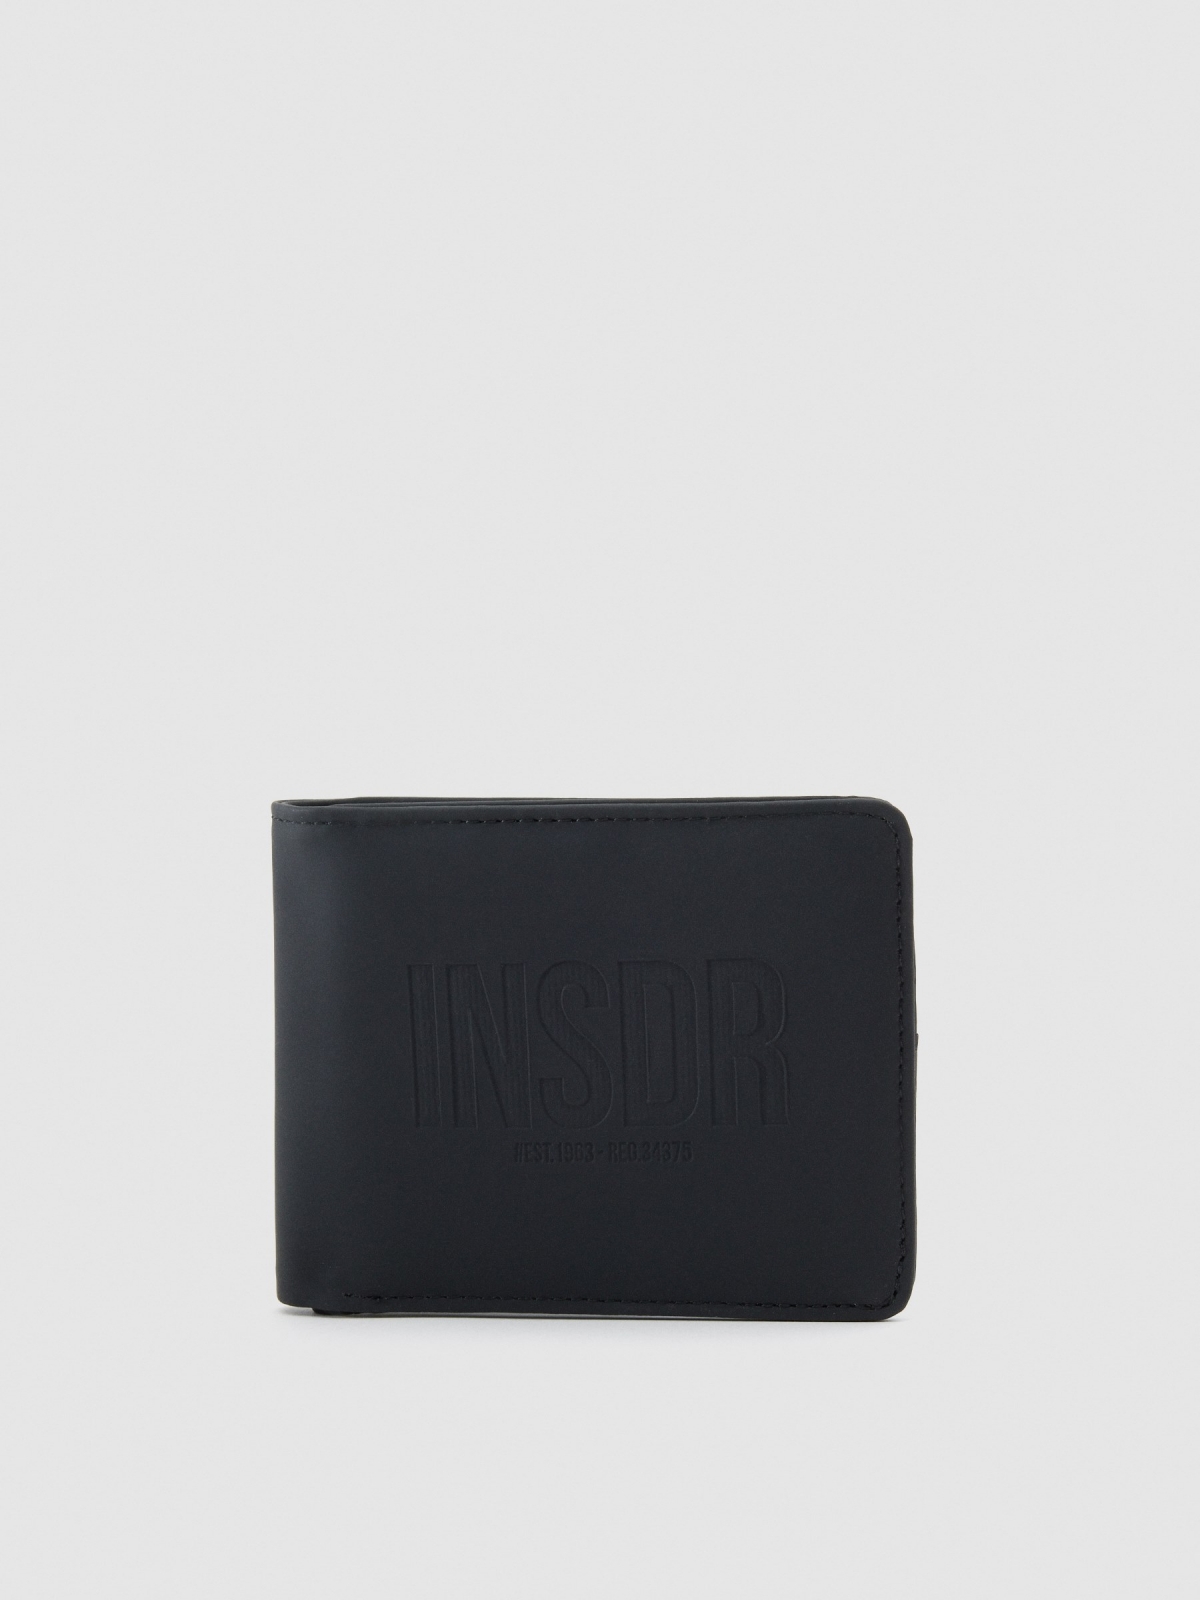 Leatherette wallet black